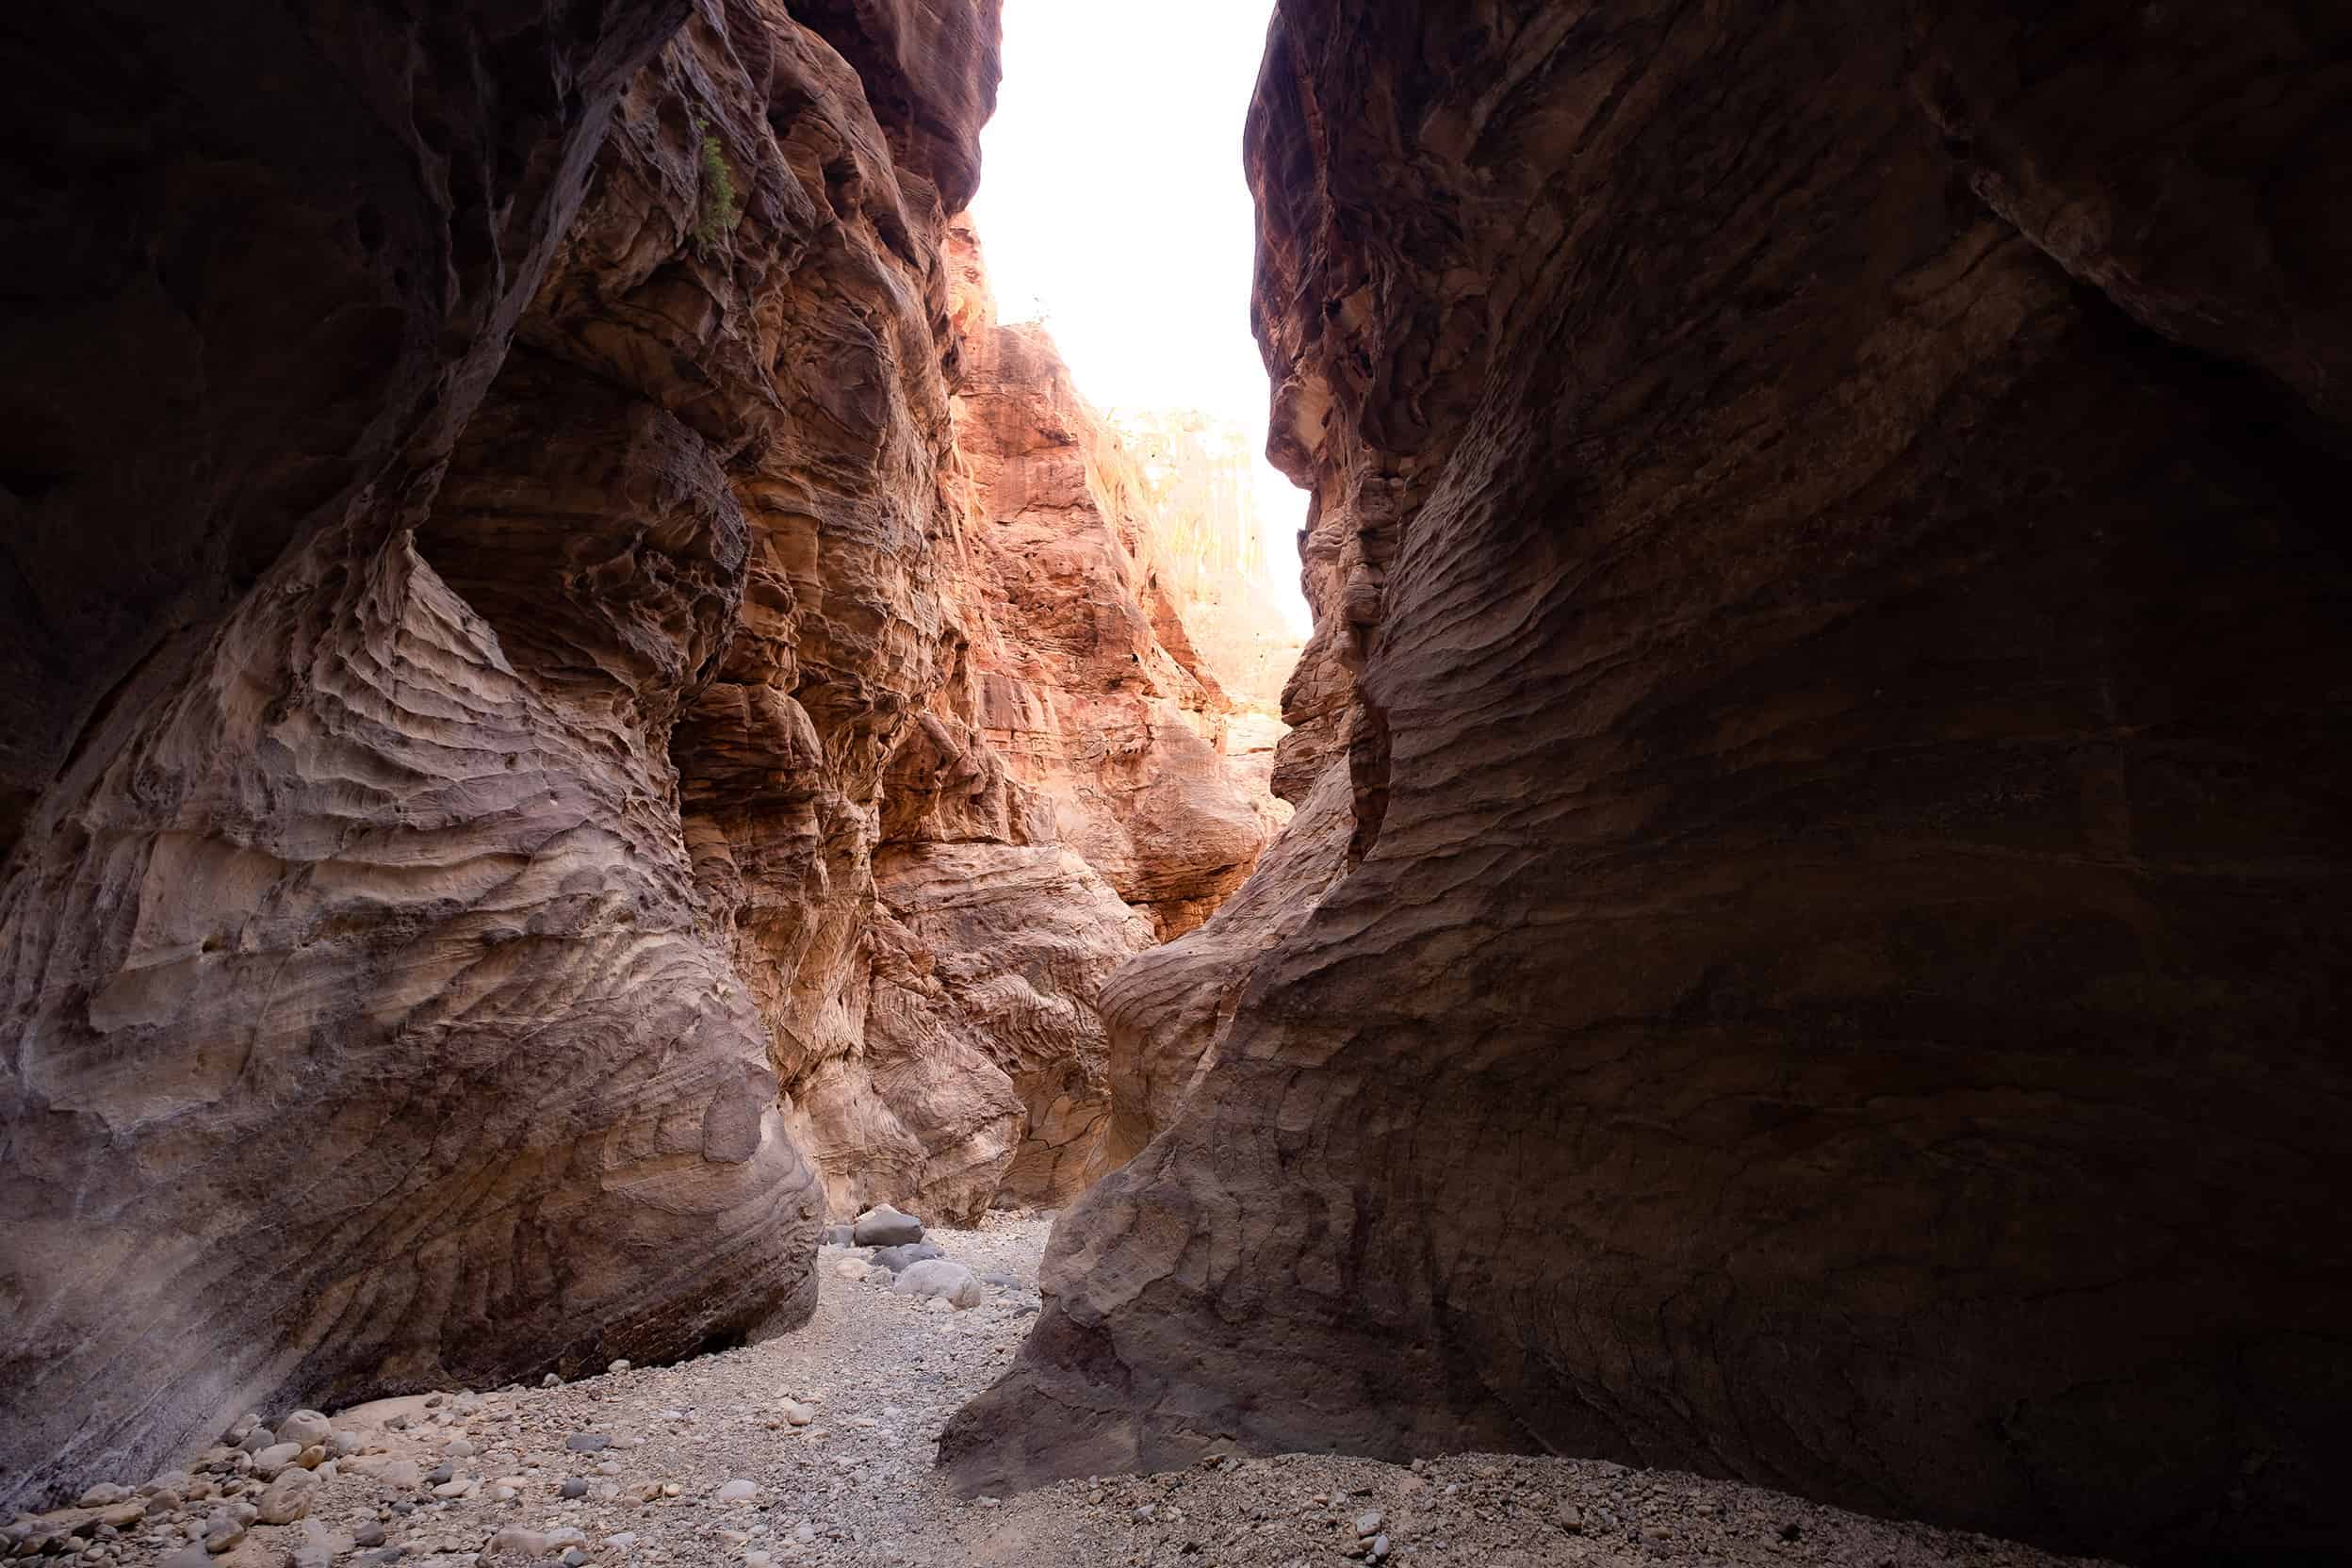 Bizarre rotsvorming in Wadi Ghuweir